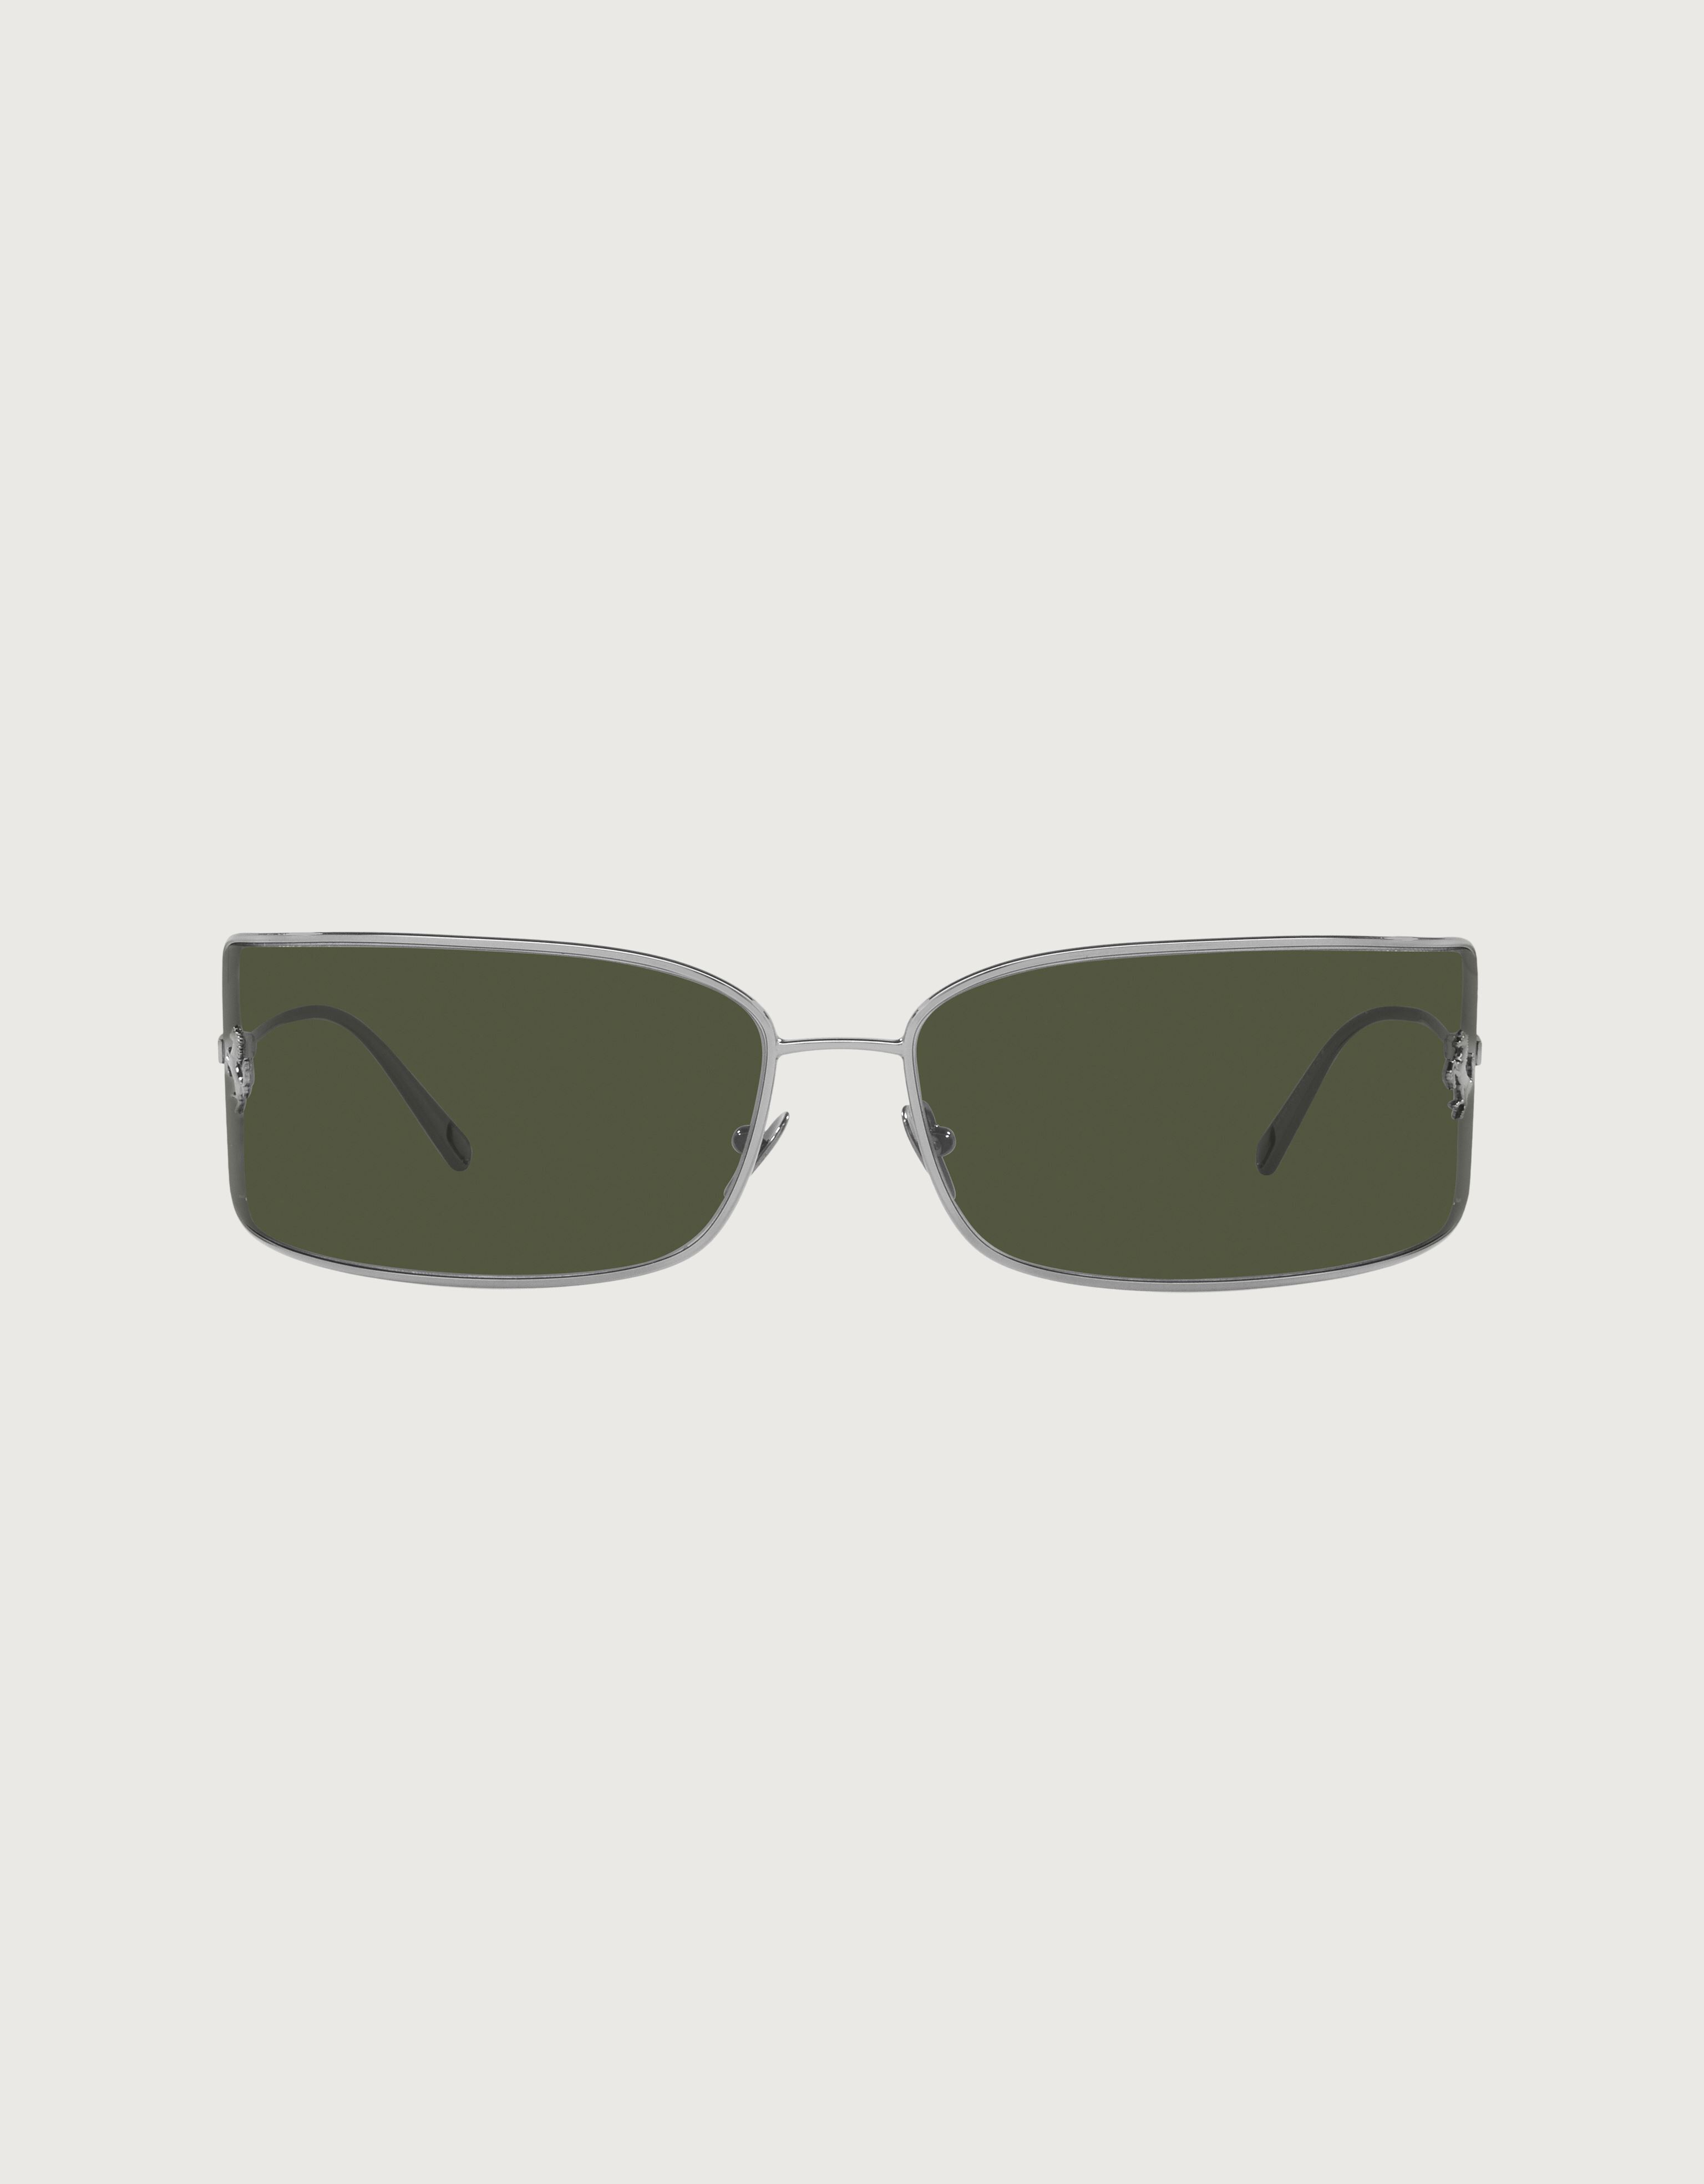 Ferrari Ferrari shield sunglasses with green lenses Black F1201f